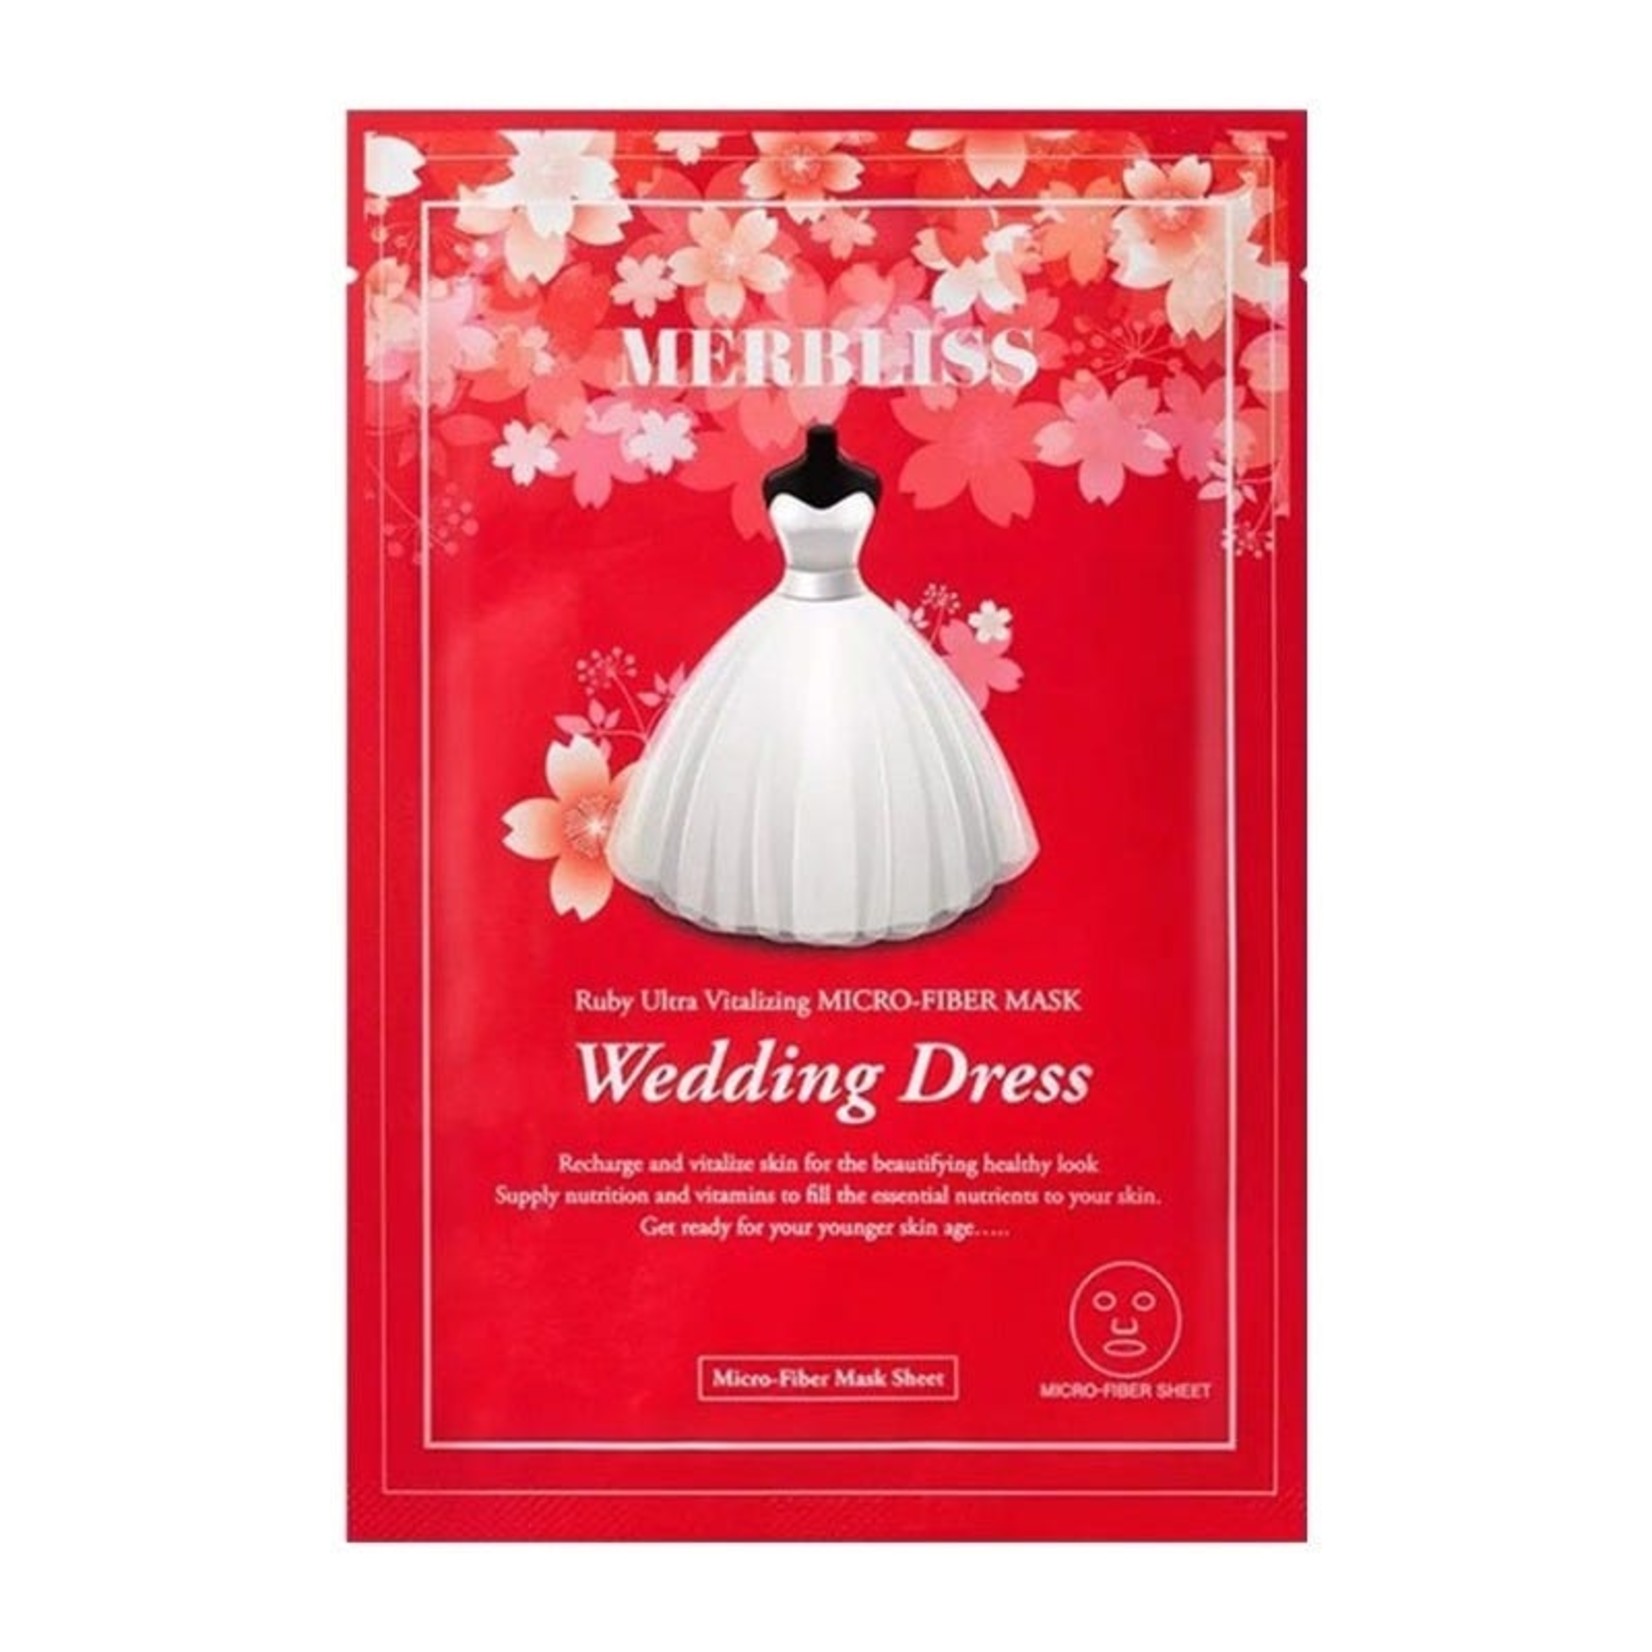 MERBLISS Wedding Dress Mask Trial Mix (6 pcs)